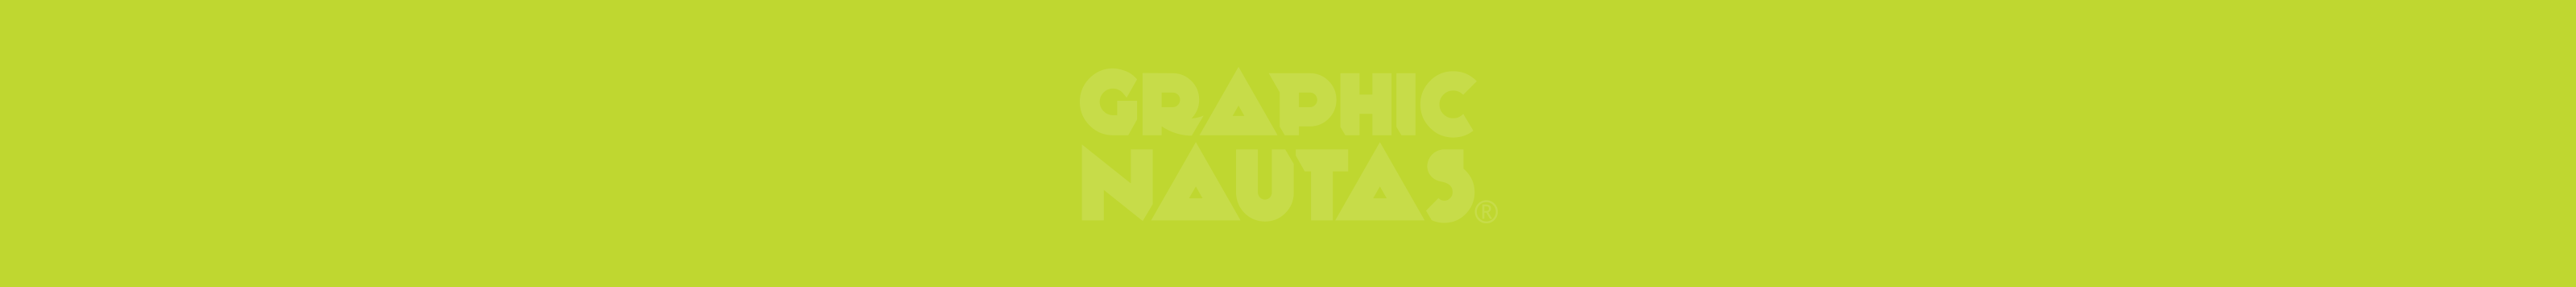 GraphicNautas Diseño's profile banner